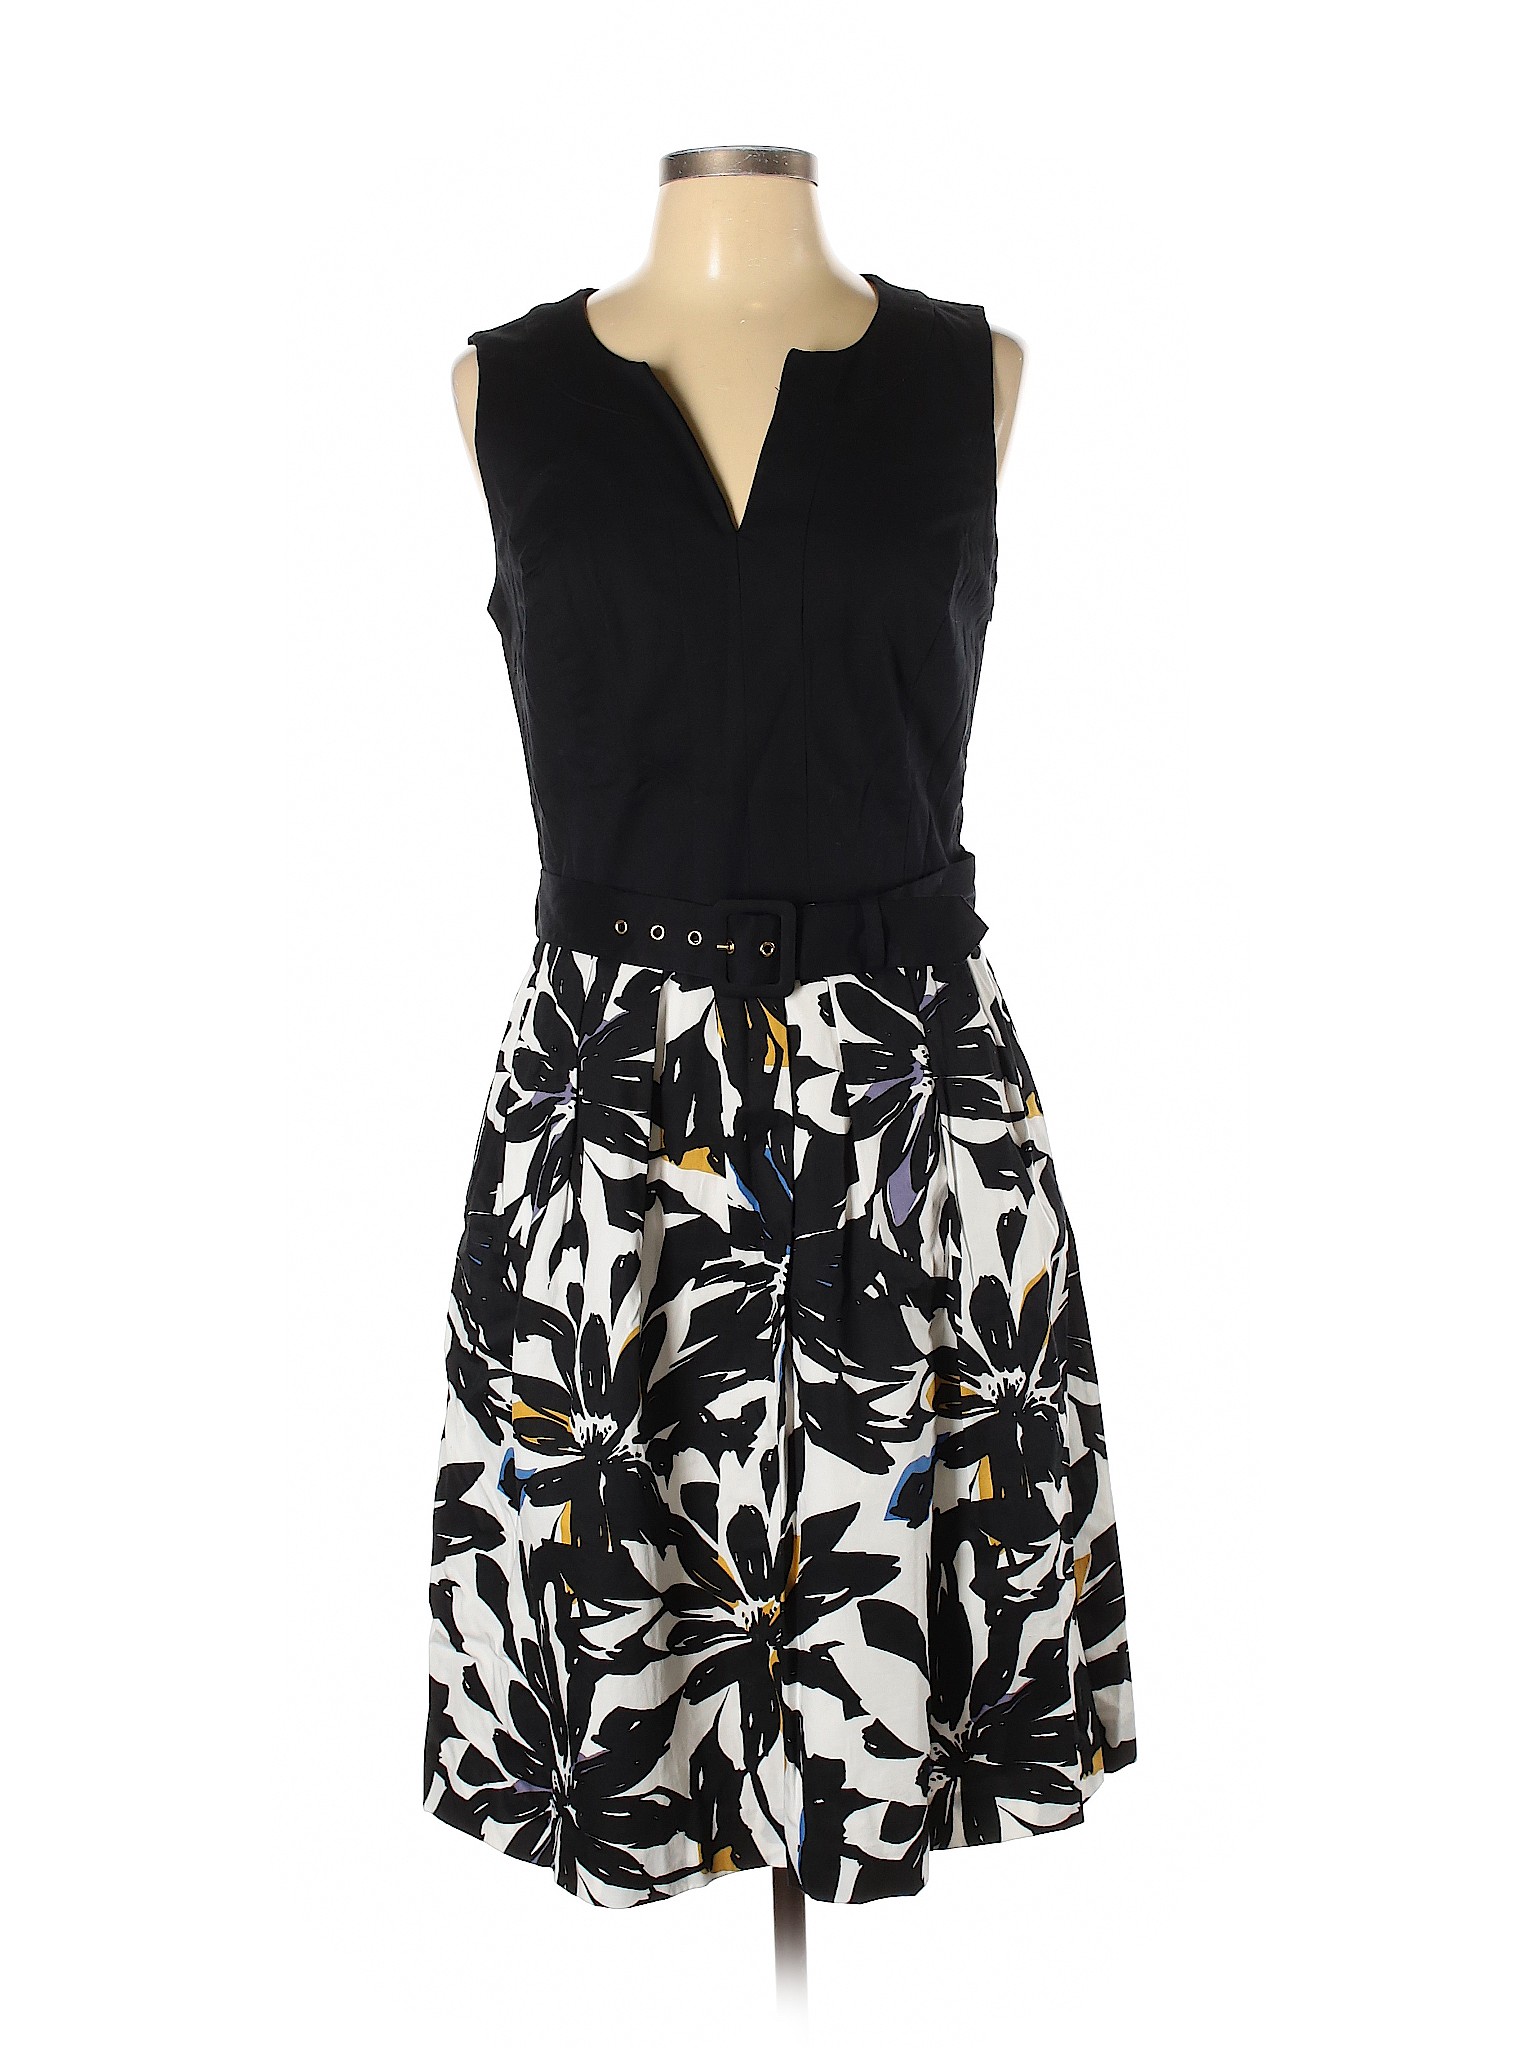 NWT Banana Republic Factory Store Women Black Casual Dress 10 | eBay